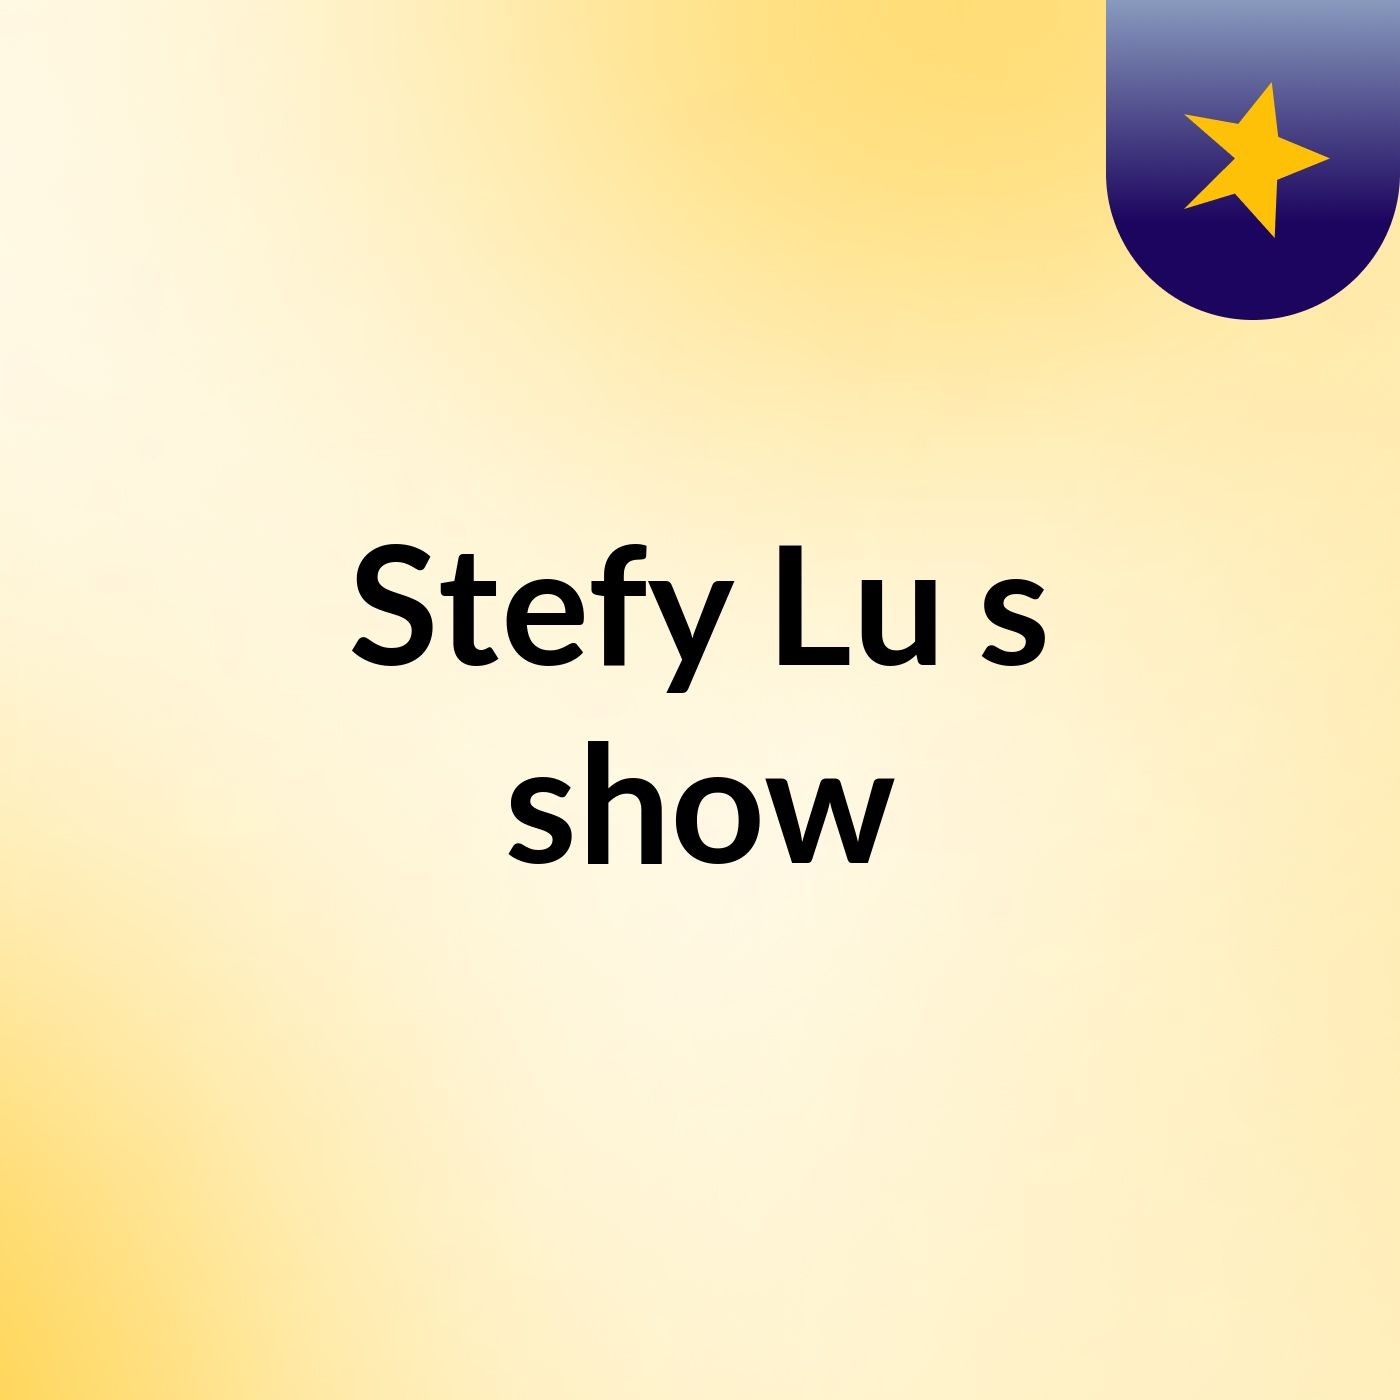 Stefy Lu's show